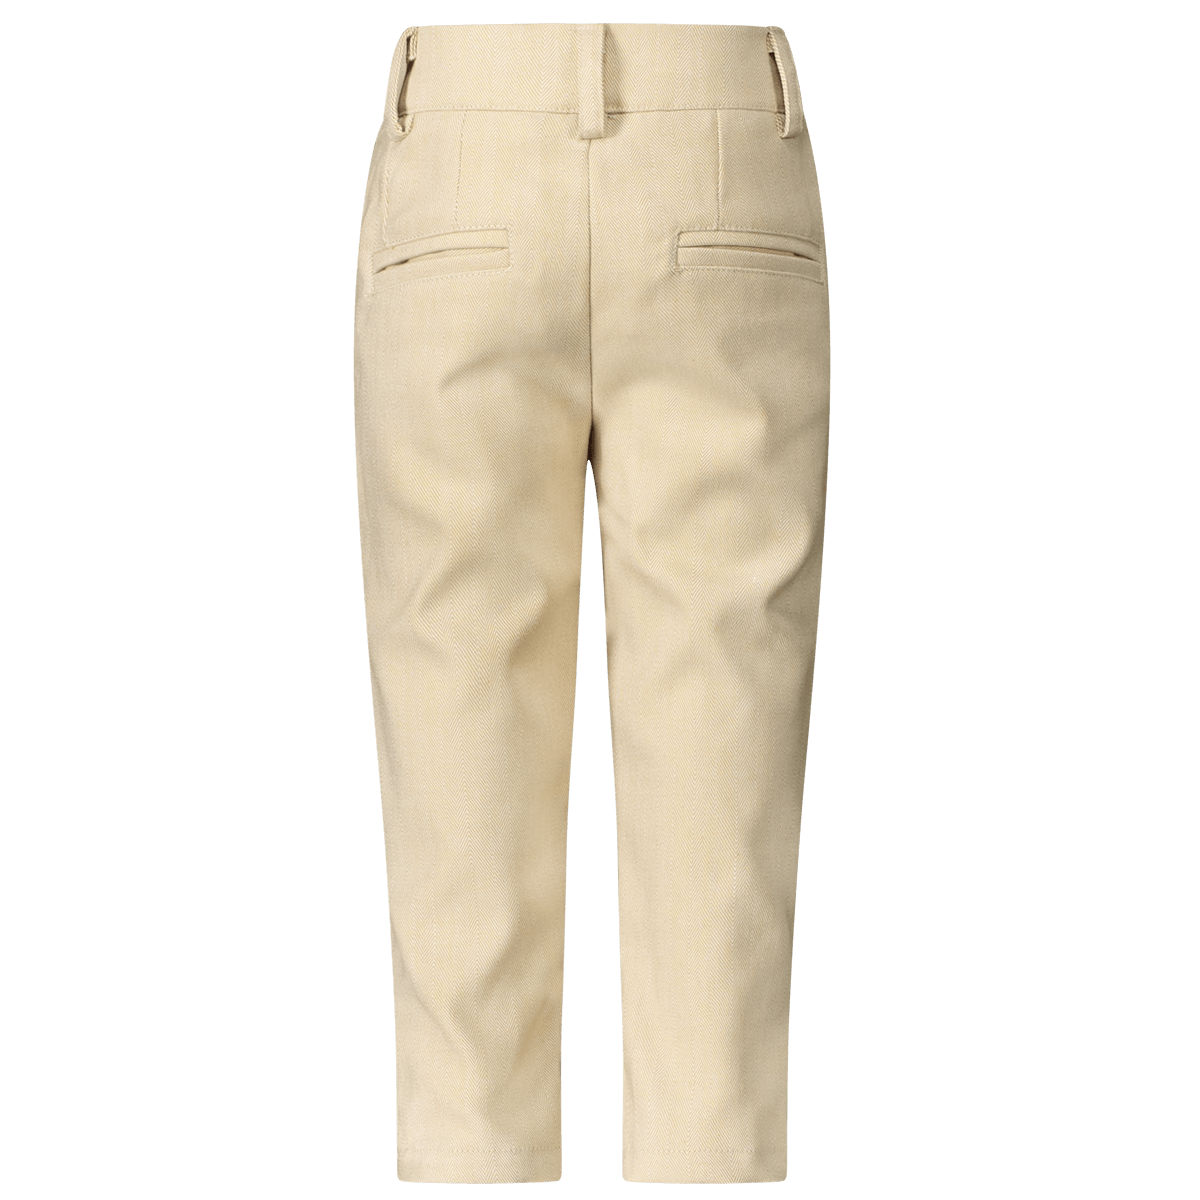 GARÇON baby herringbone pants - Le Chic Fashion